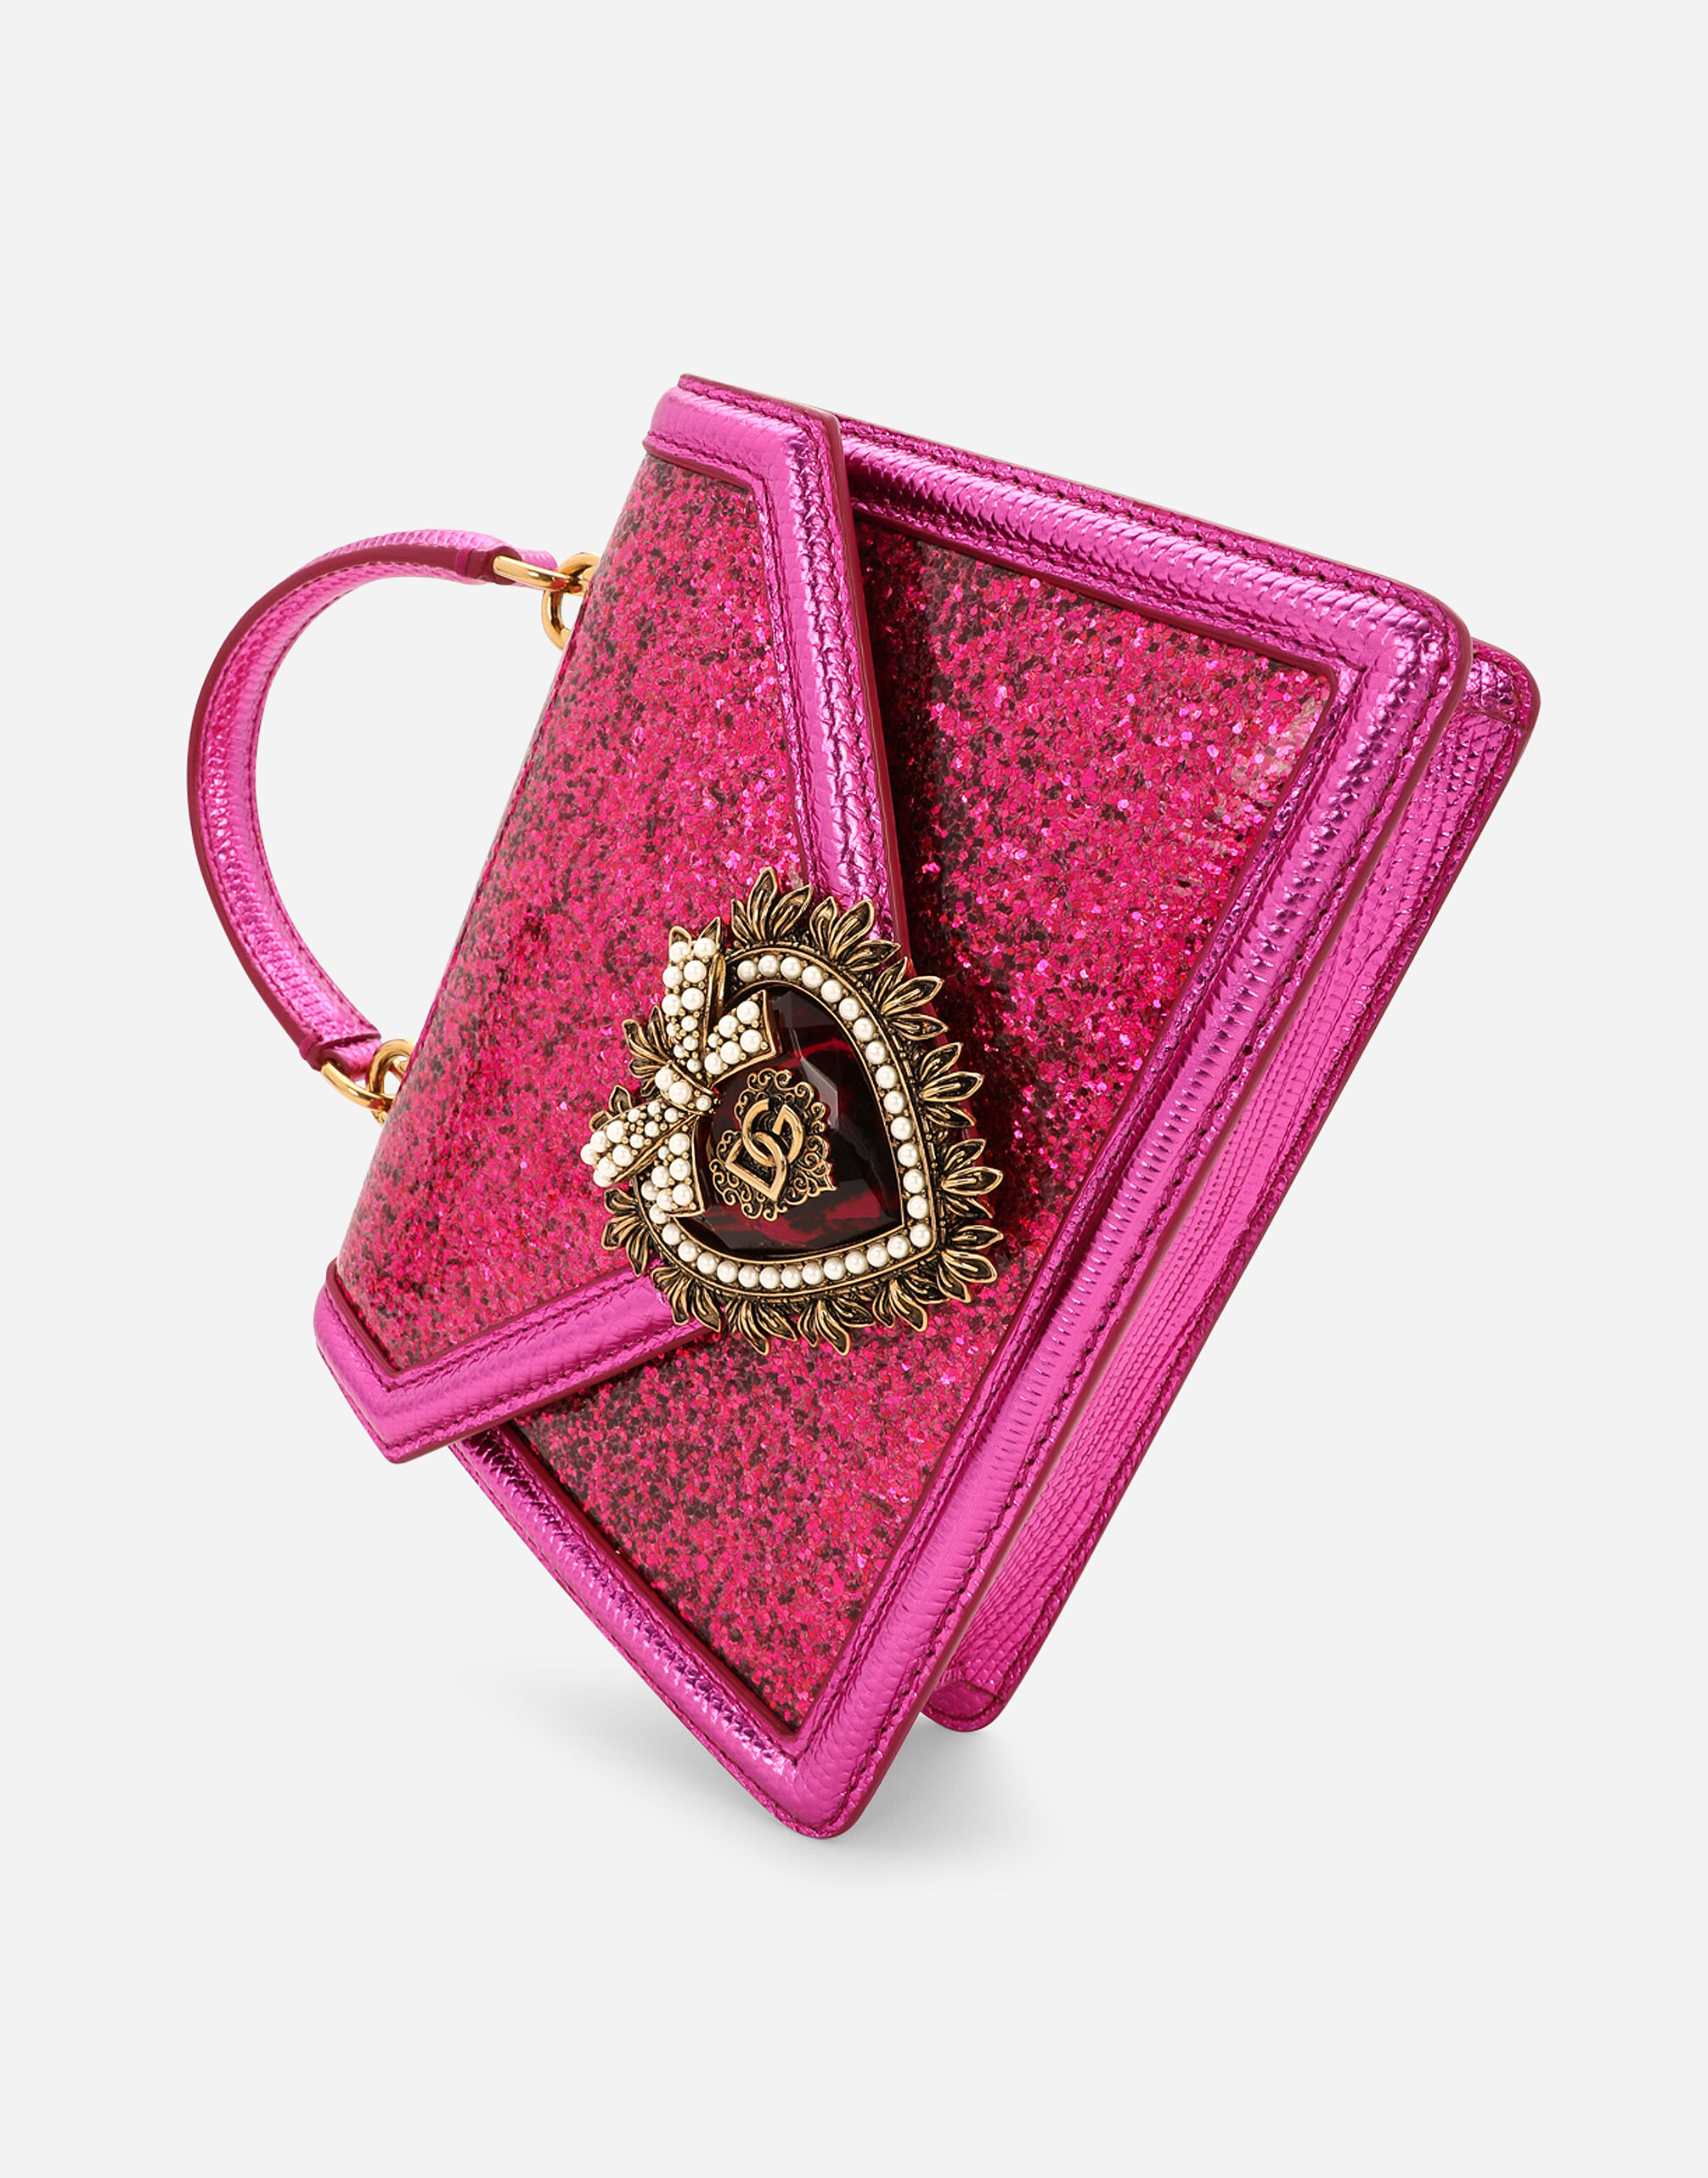 Small Devotion top-handle bag in Fuchsia for Women | Dolce&Gabbana®